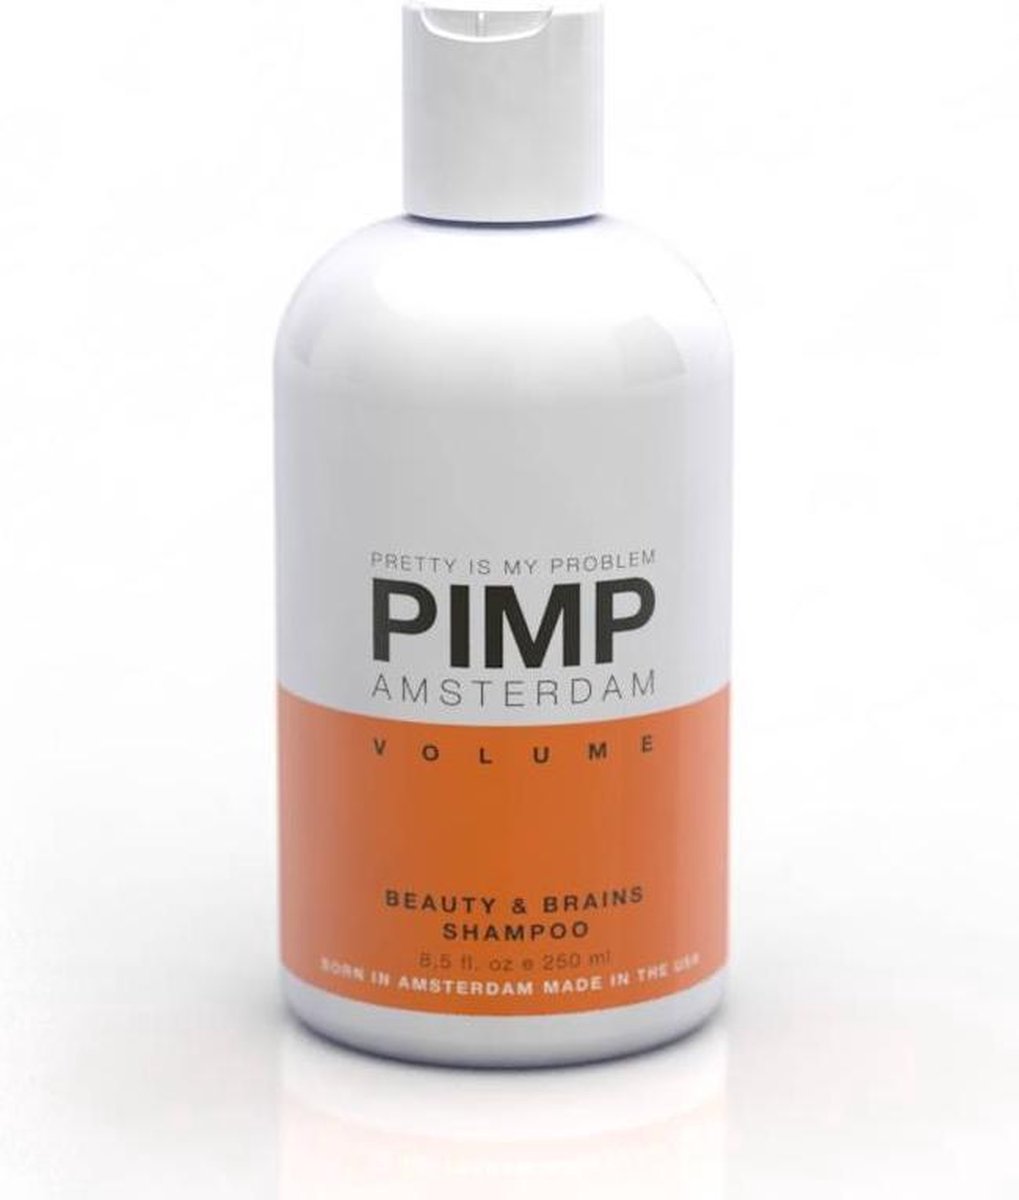 PIMP - Beauty & Brains Volume Shampoo - 250ml